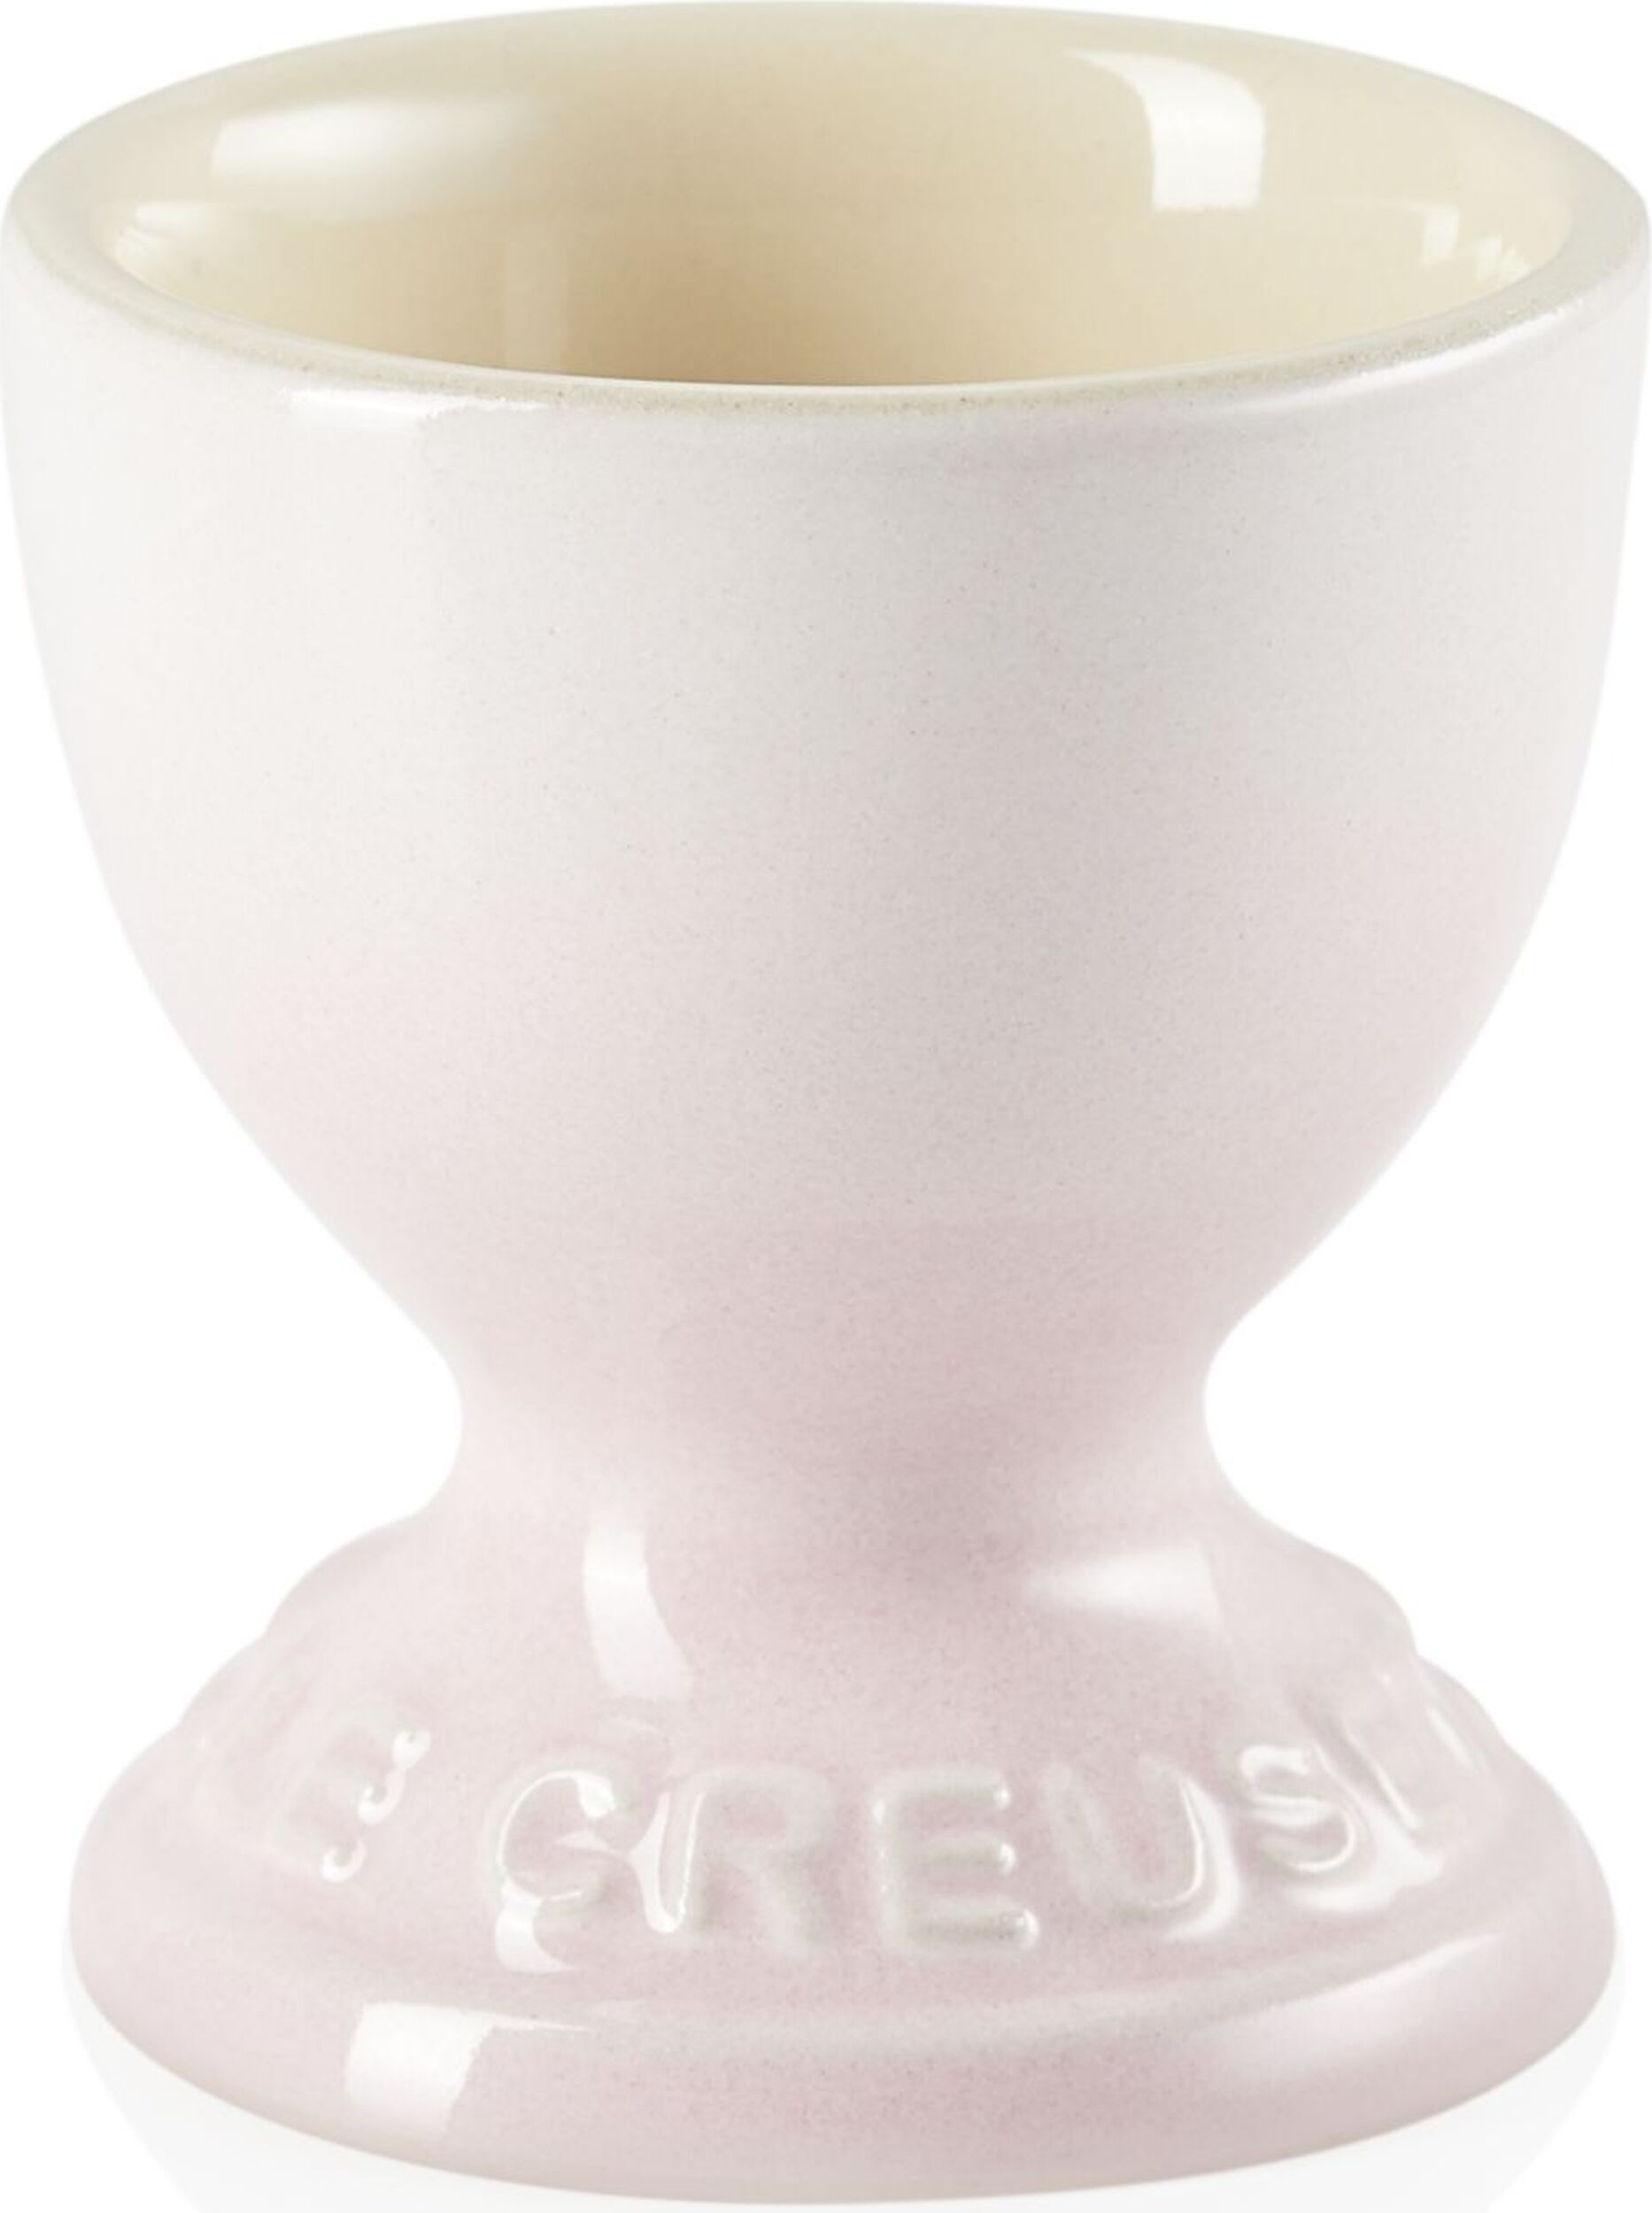 Le Creuset Egg glass - 81702001400099